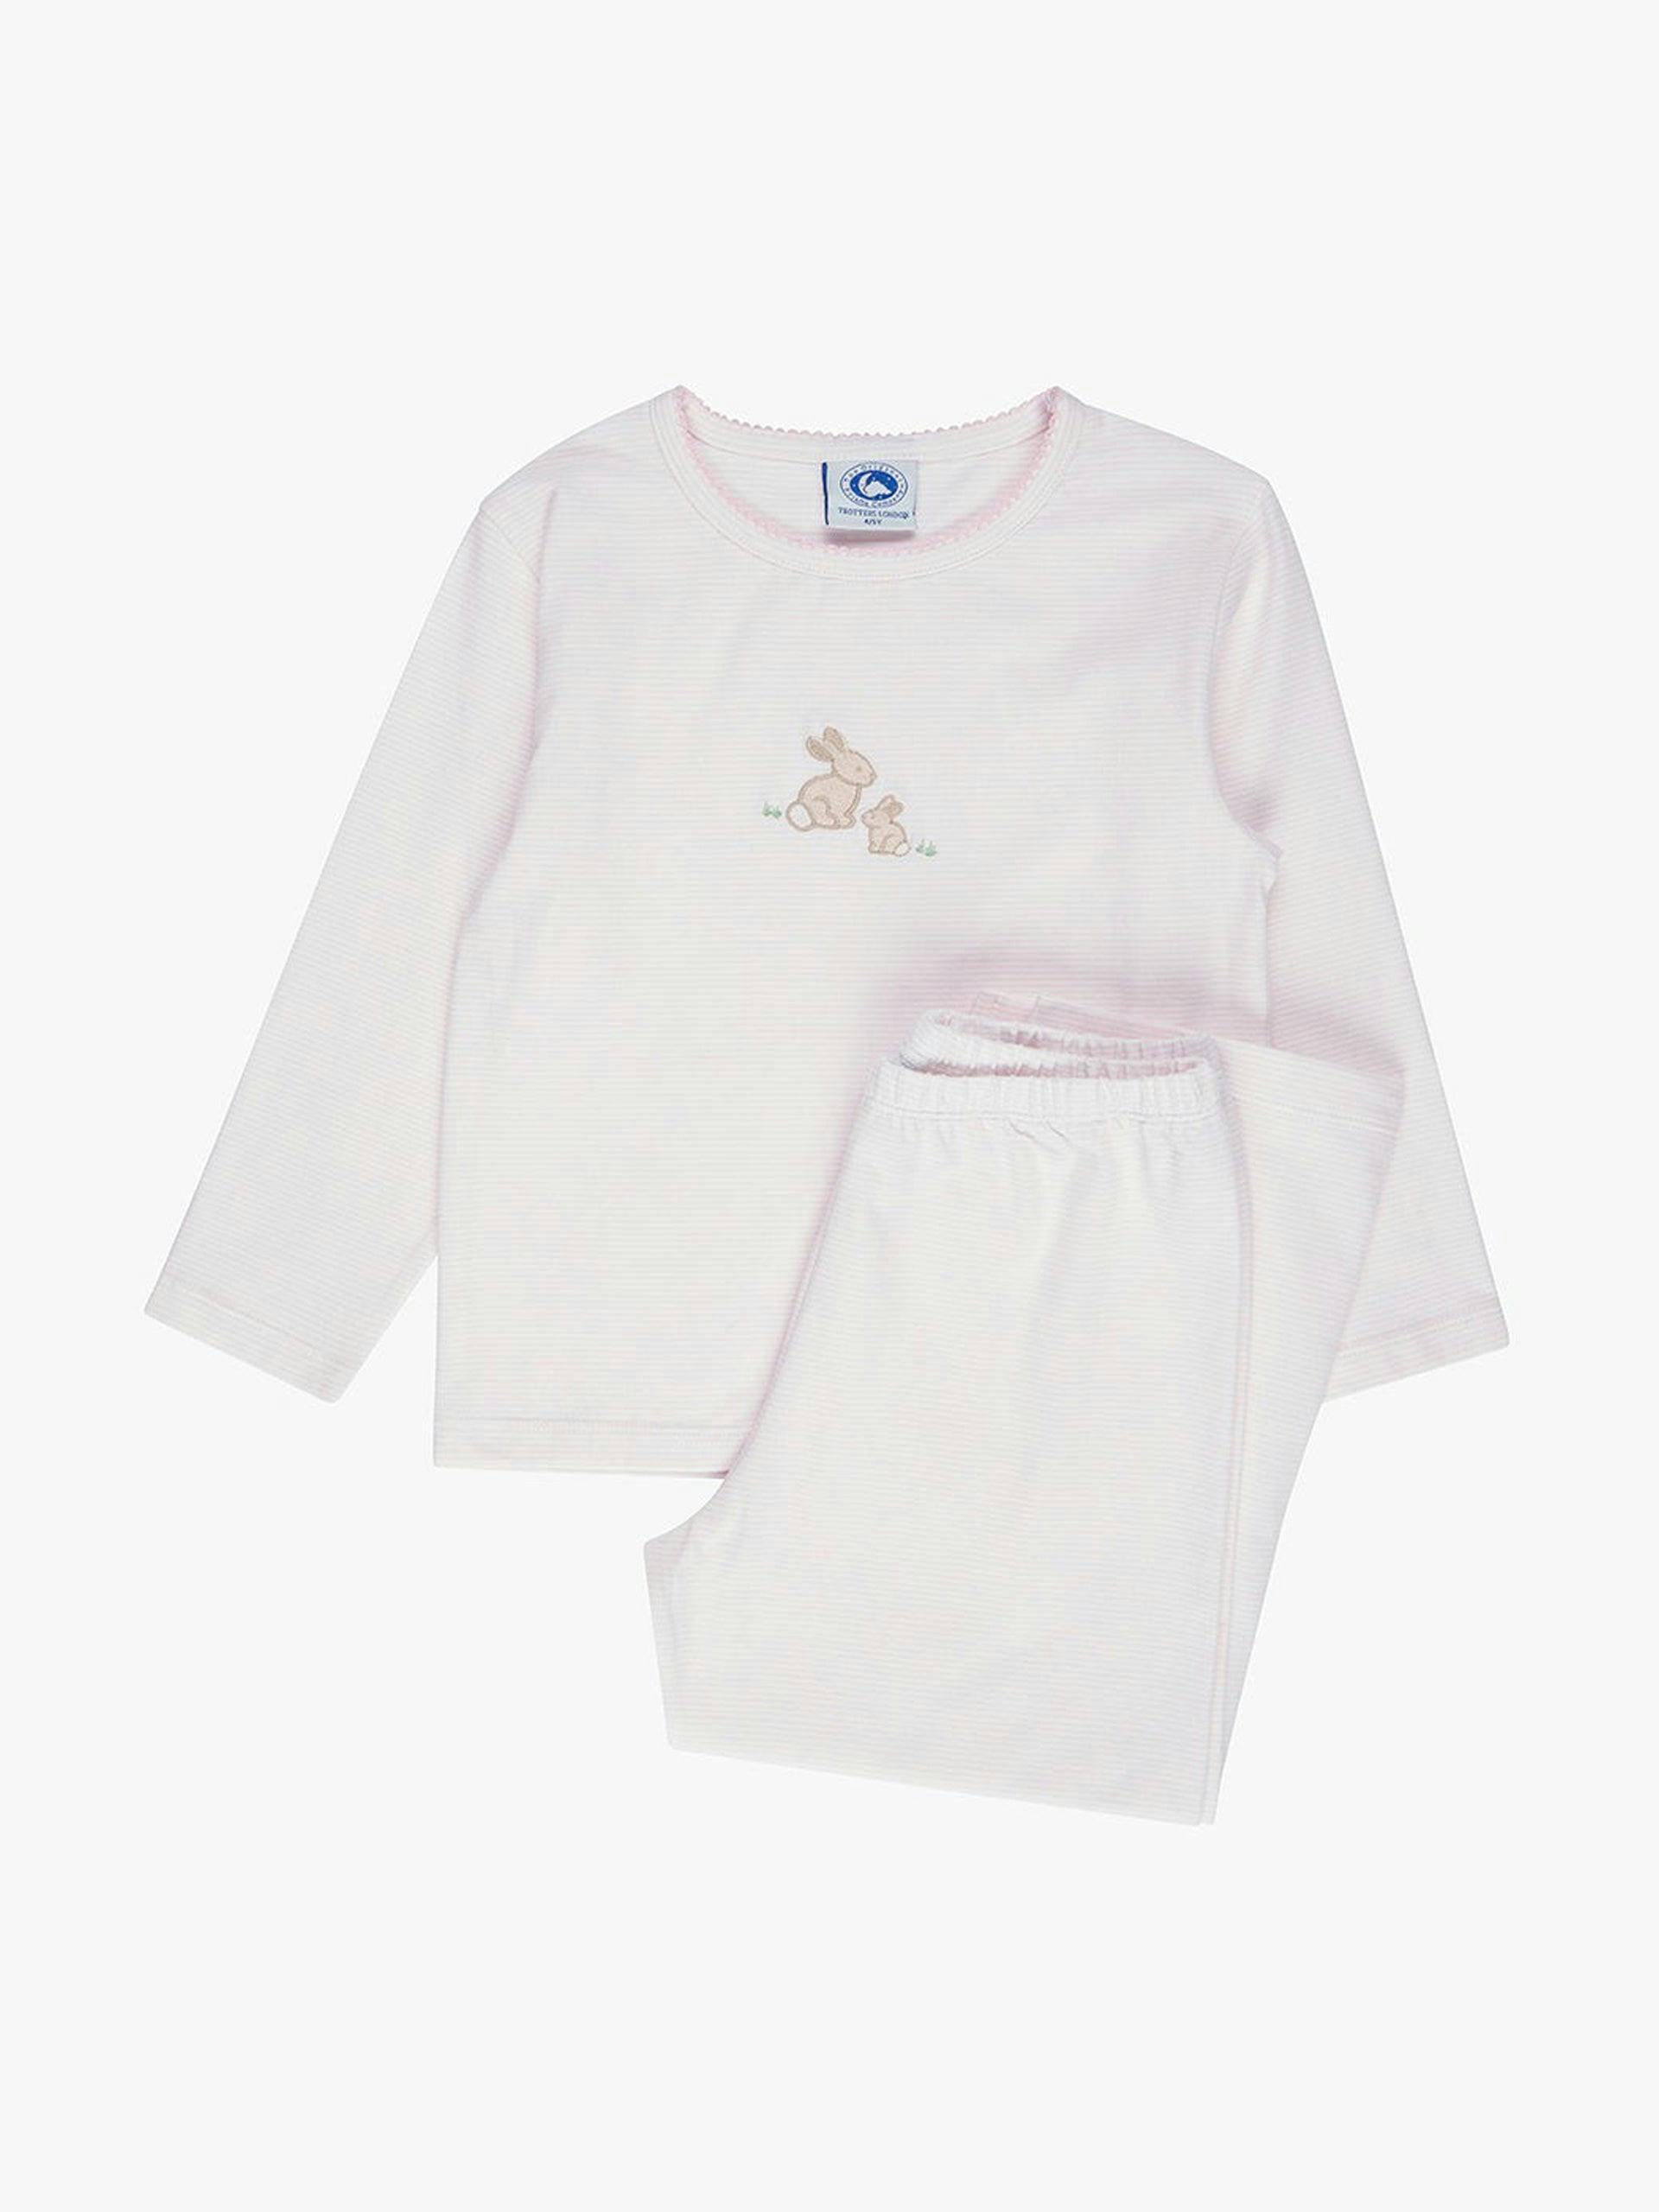 Stripy pink bunny embroidered girls pyjamas